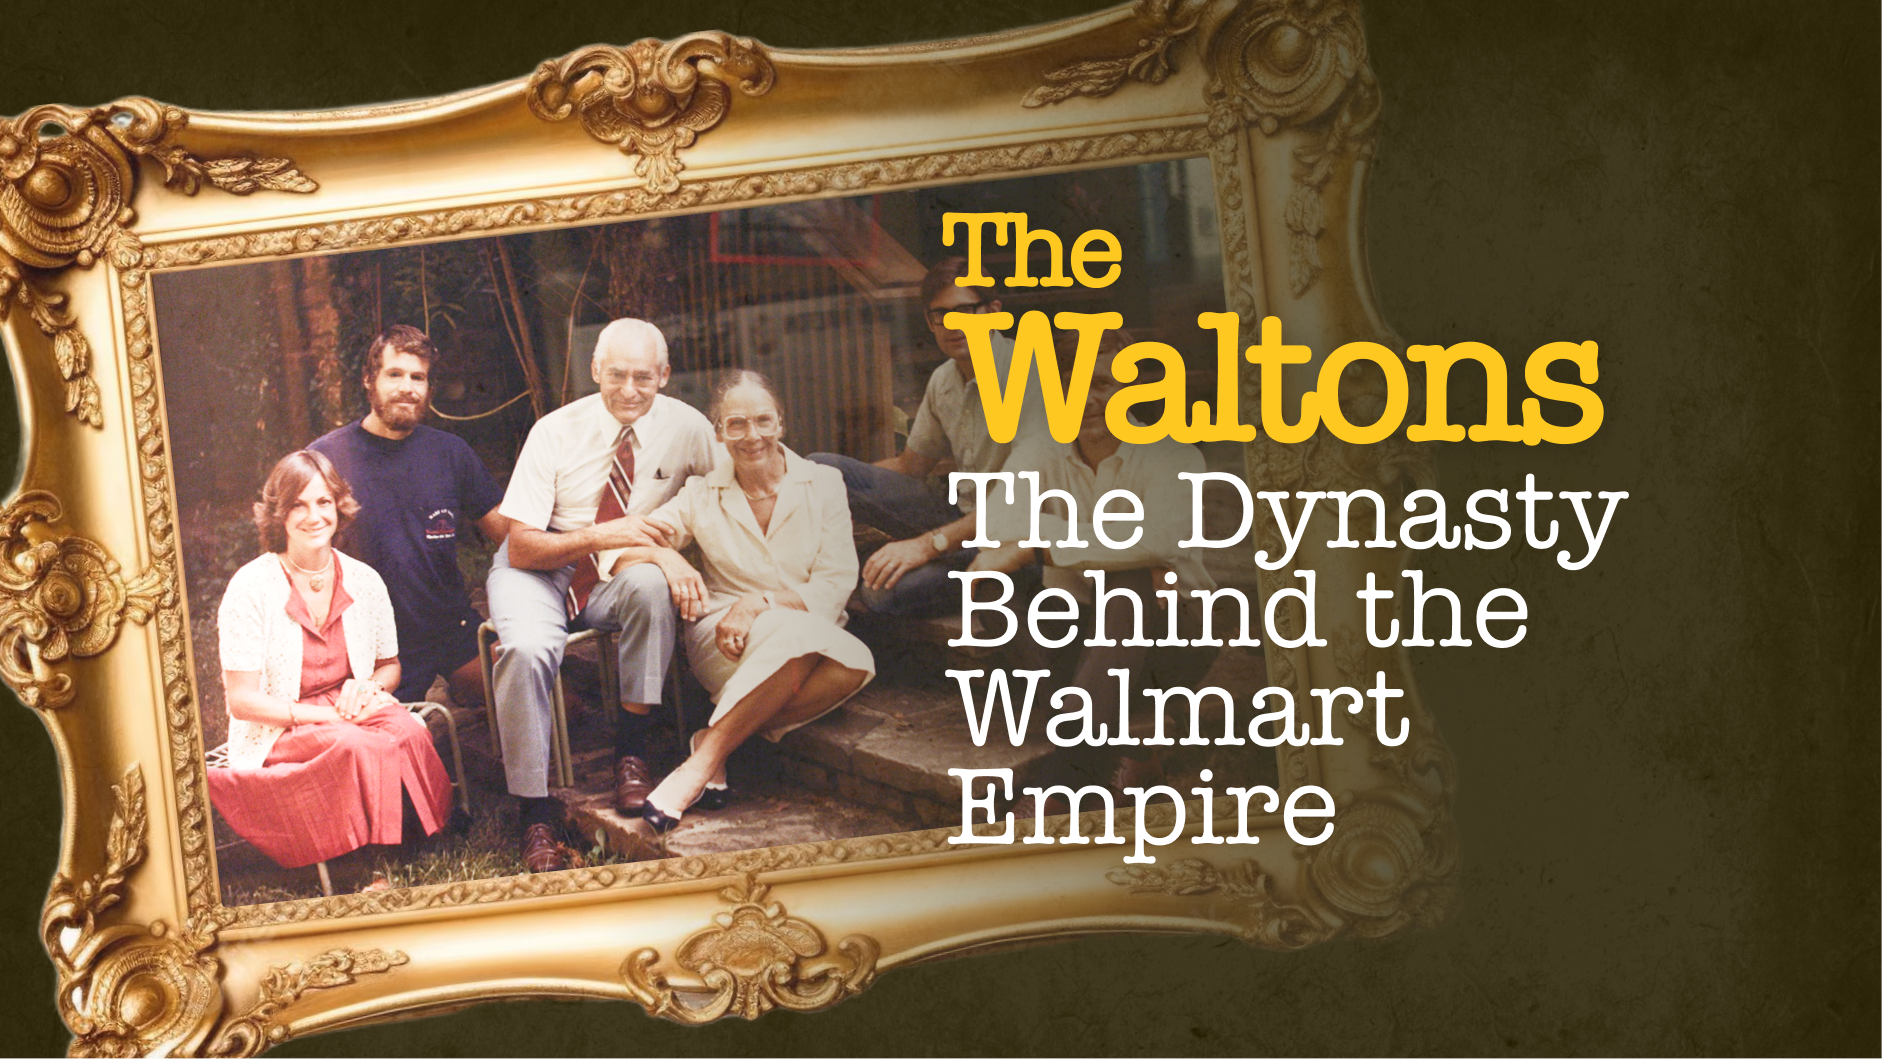 The Walton Family, Founders of Walmart